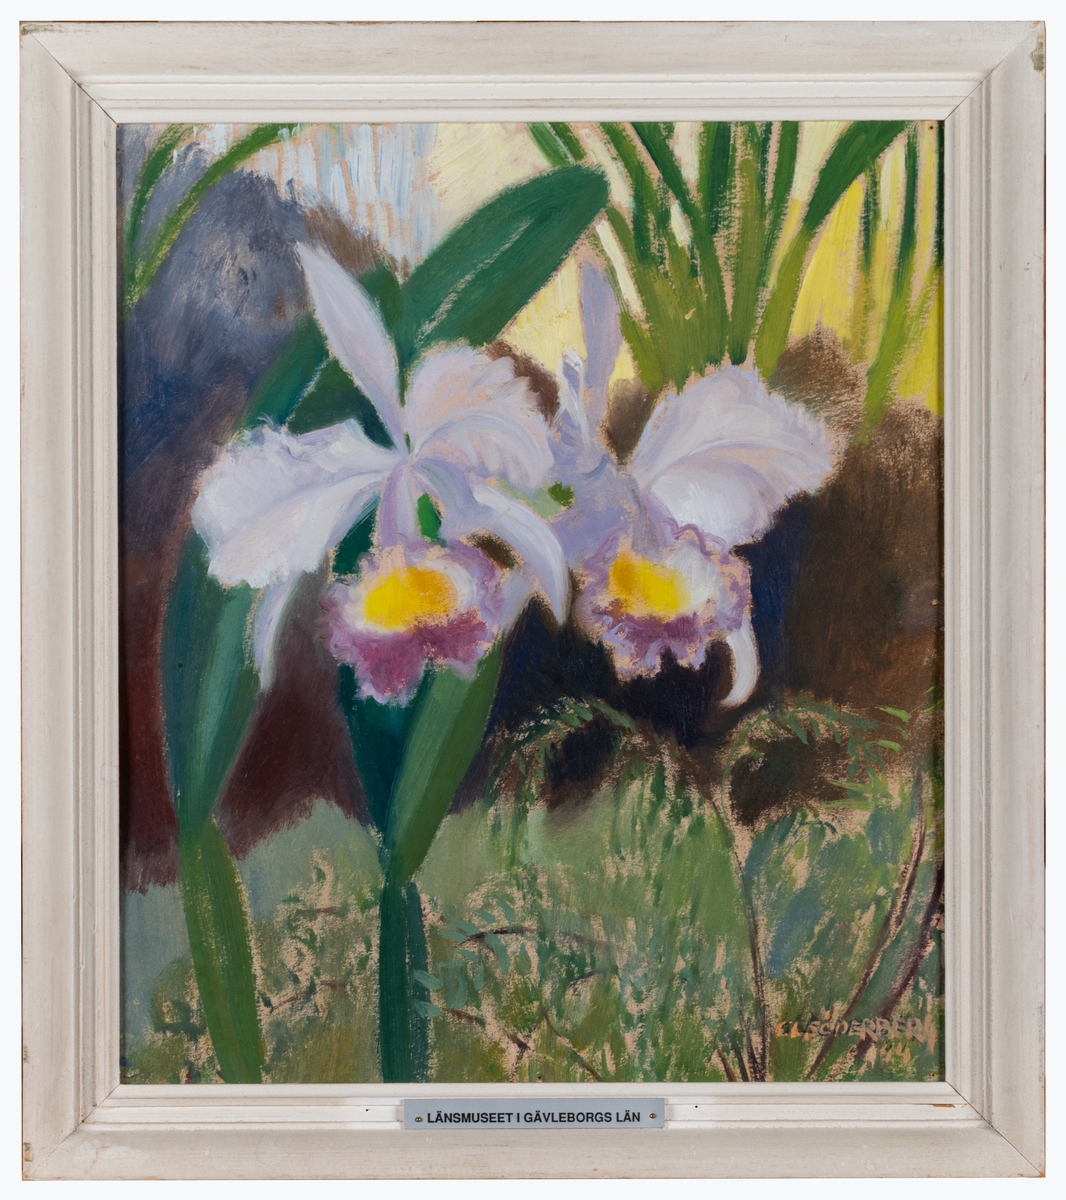 Målning, olja på pannå, titel Orkidé, ljuslila oh gula orkidéer med växtlighet i bakgrunden.